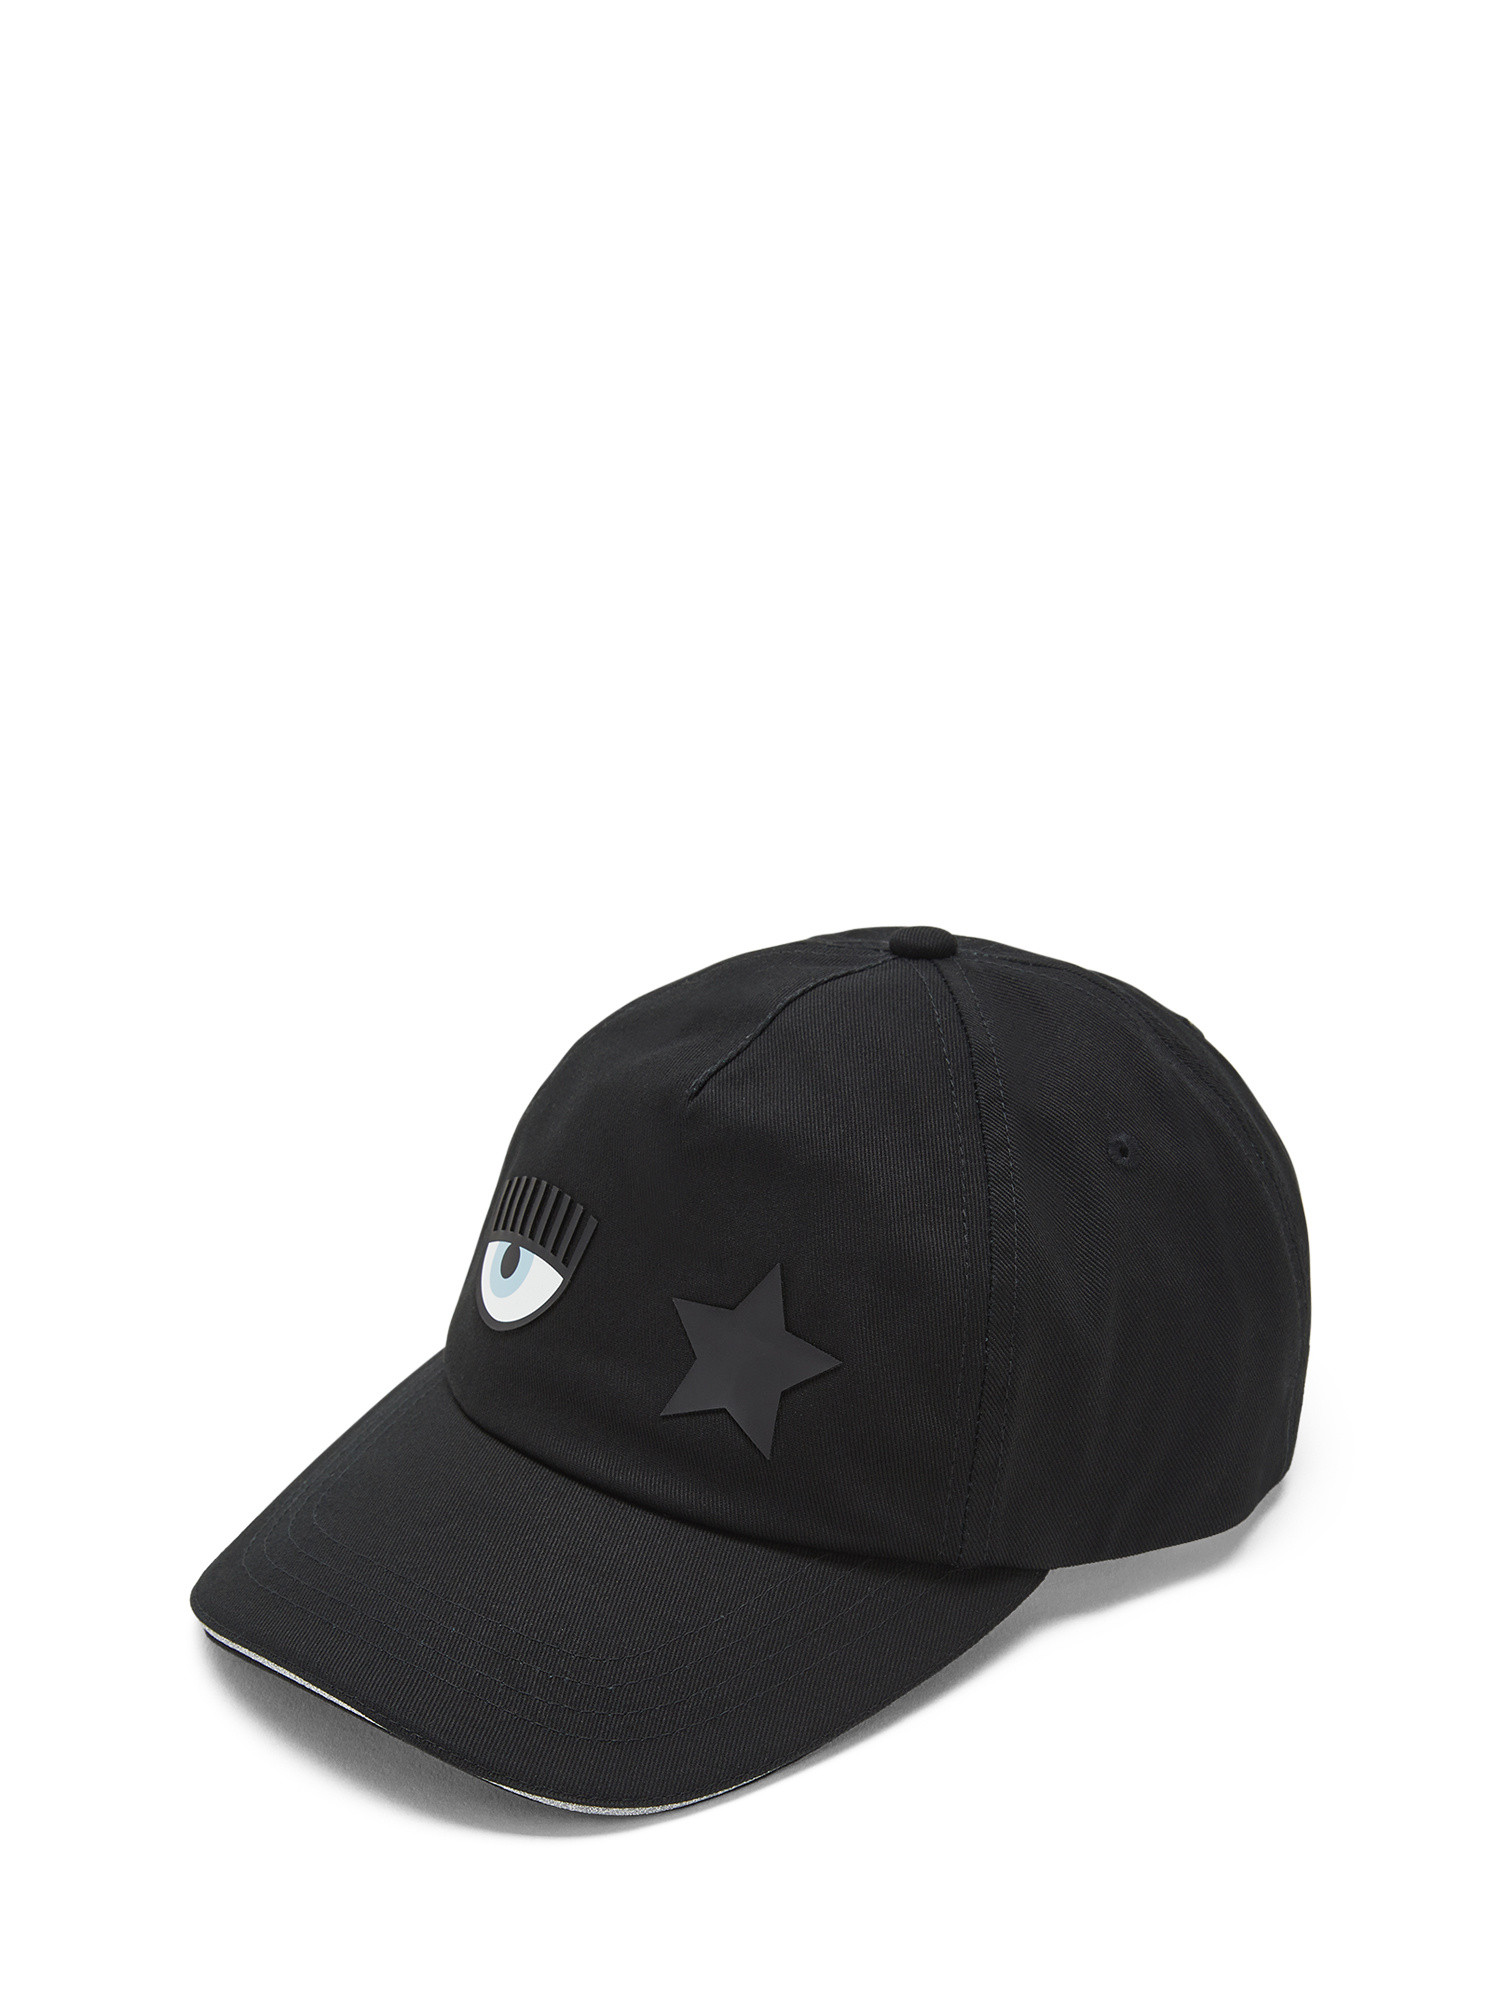 Chiara Ferragni - Eye Star baseball hat, Black, large image number 0